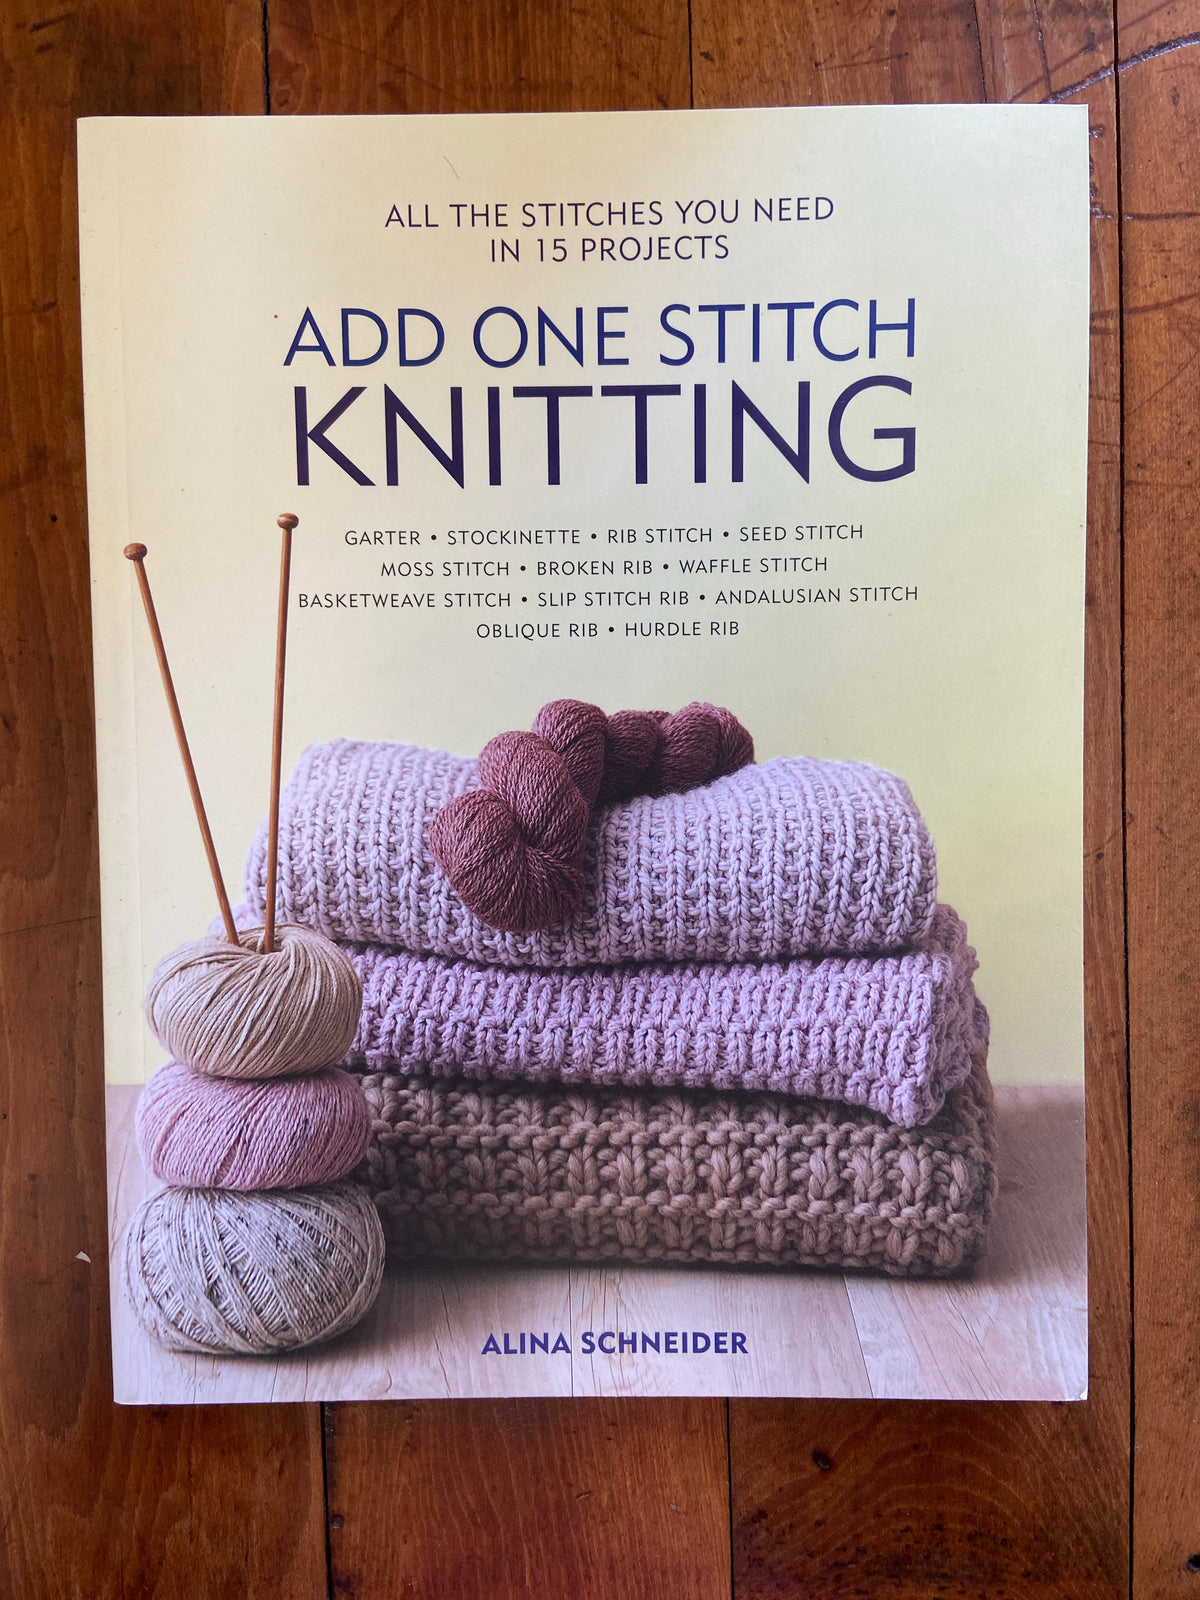 Beginner Knitting Kit - Vale Scarf in Stormy Grey